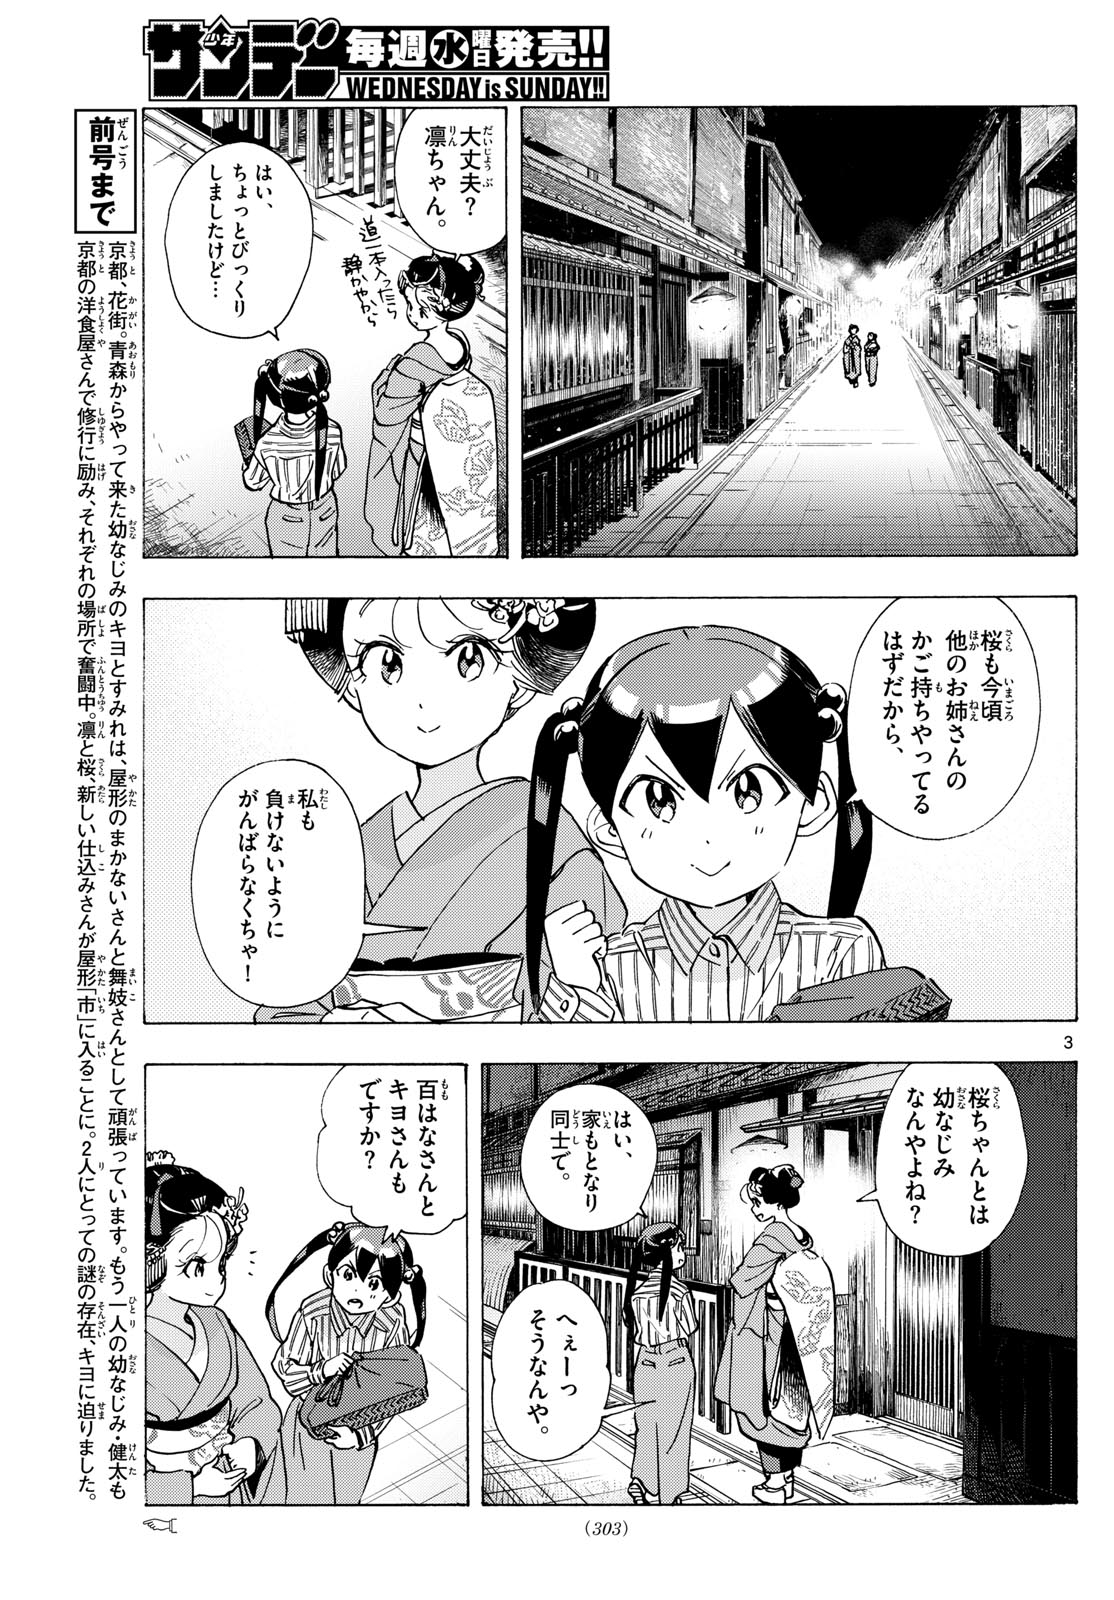 Maiko-san Chi no Makanai-san - Chapter 290 - Page 3